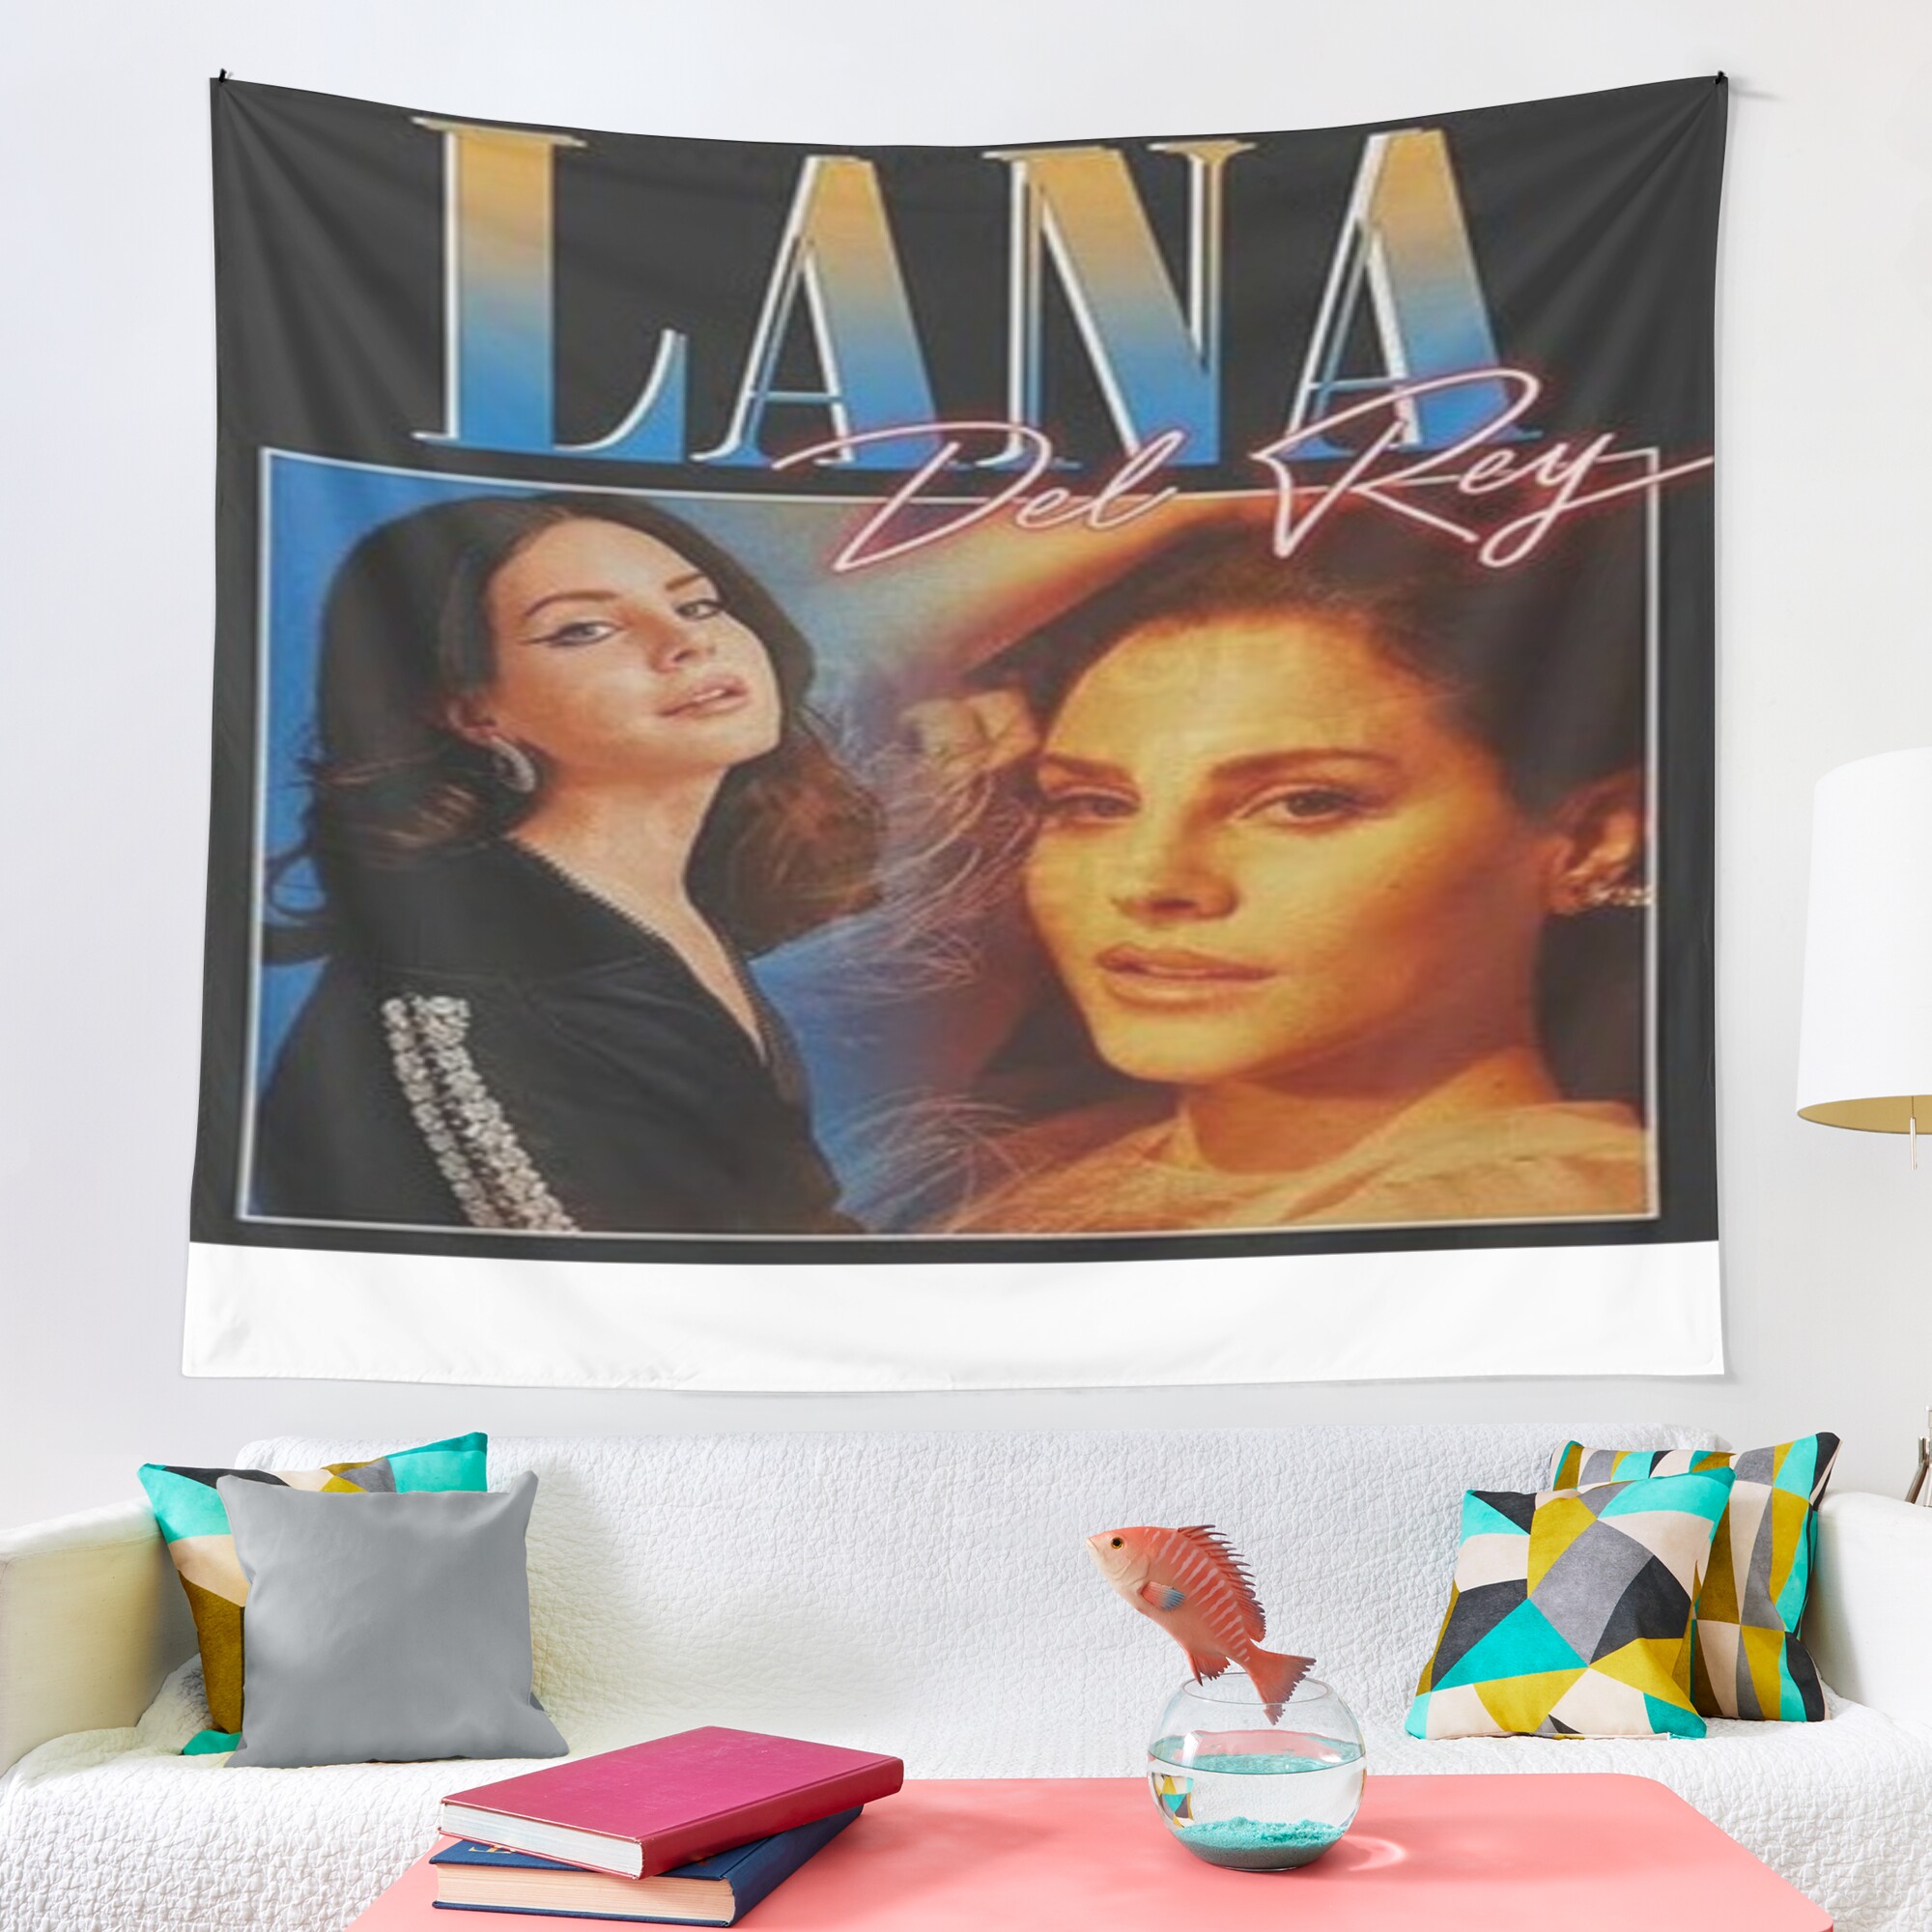 urtapestry lifestyle largesquare2000x2000 1 - Lana Del Rey Merch